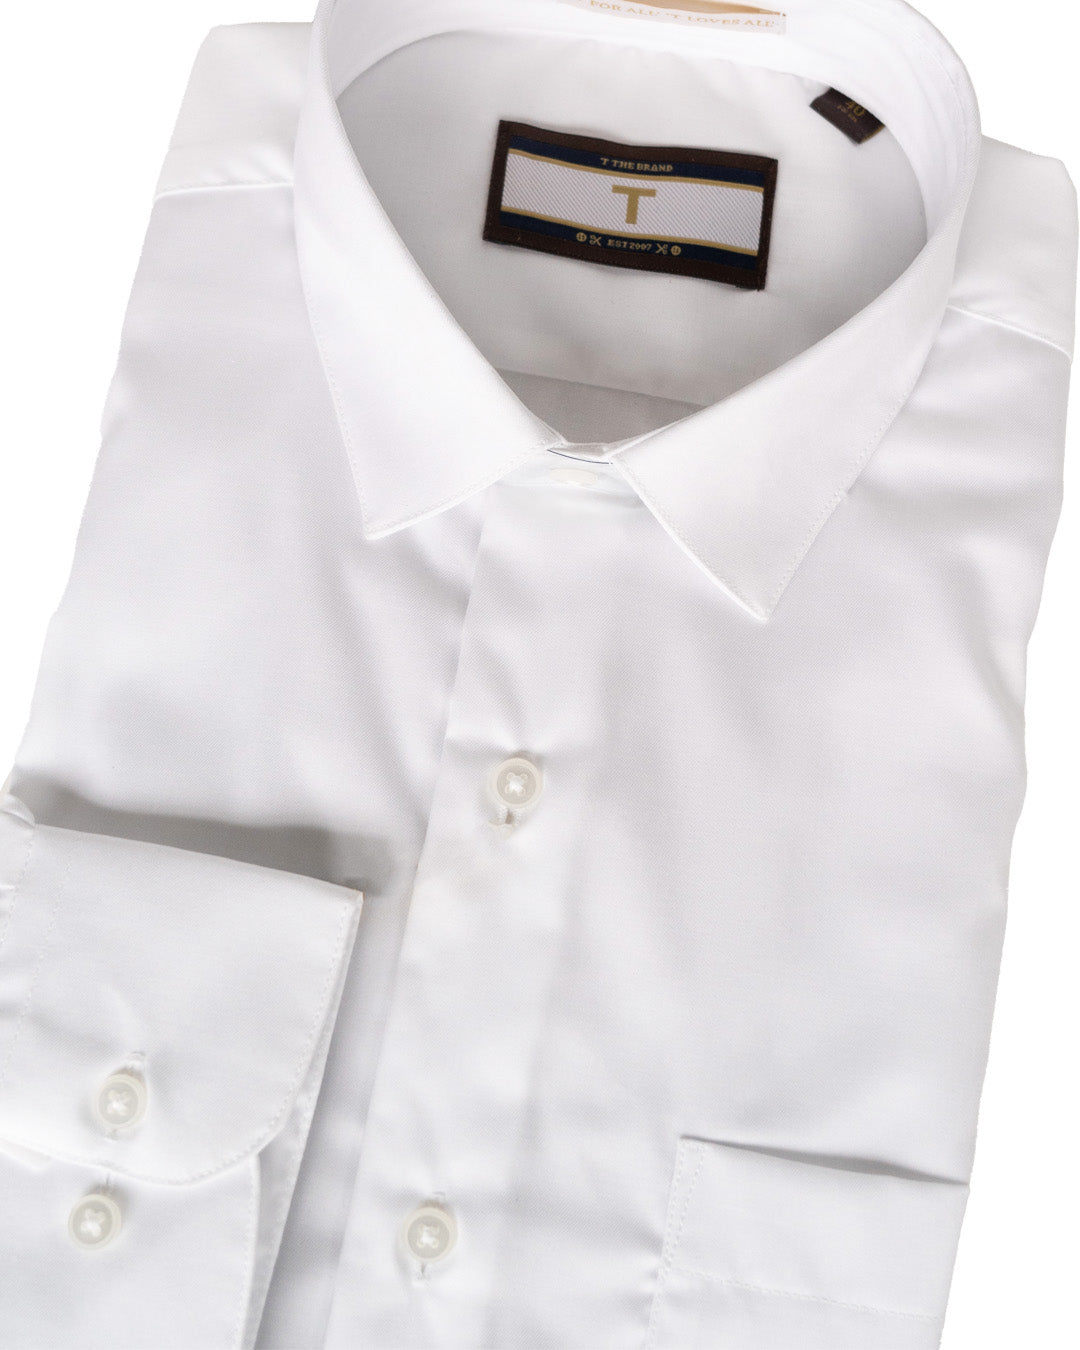 T the Brand Classic White Superfine Cotton Twill Shirt